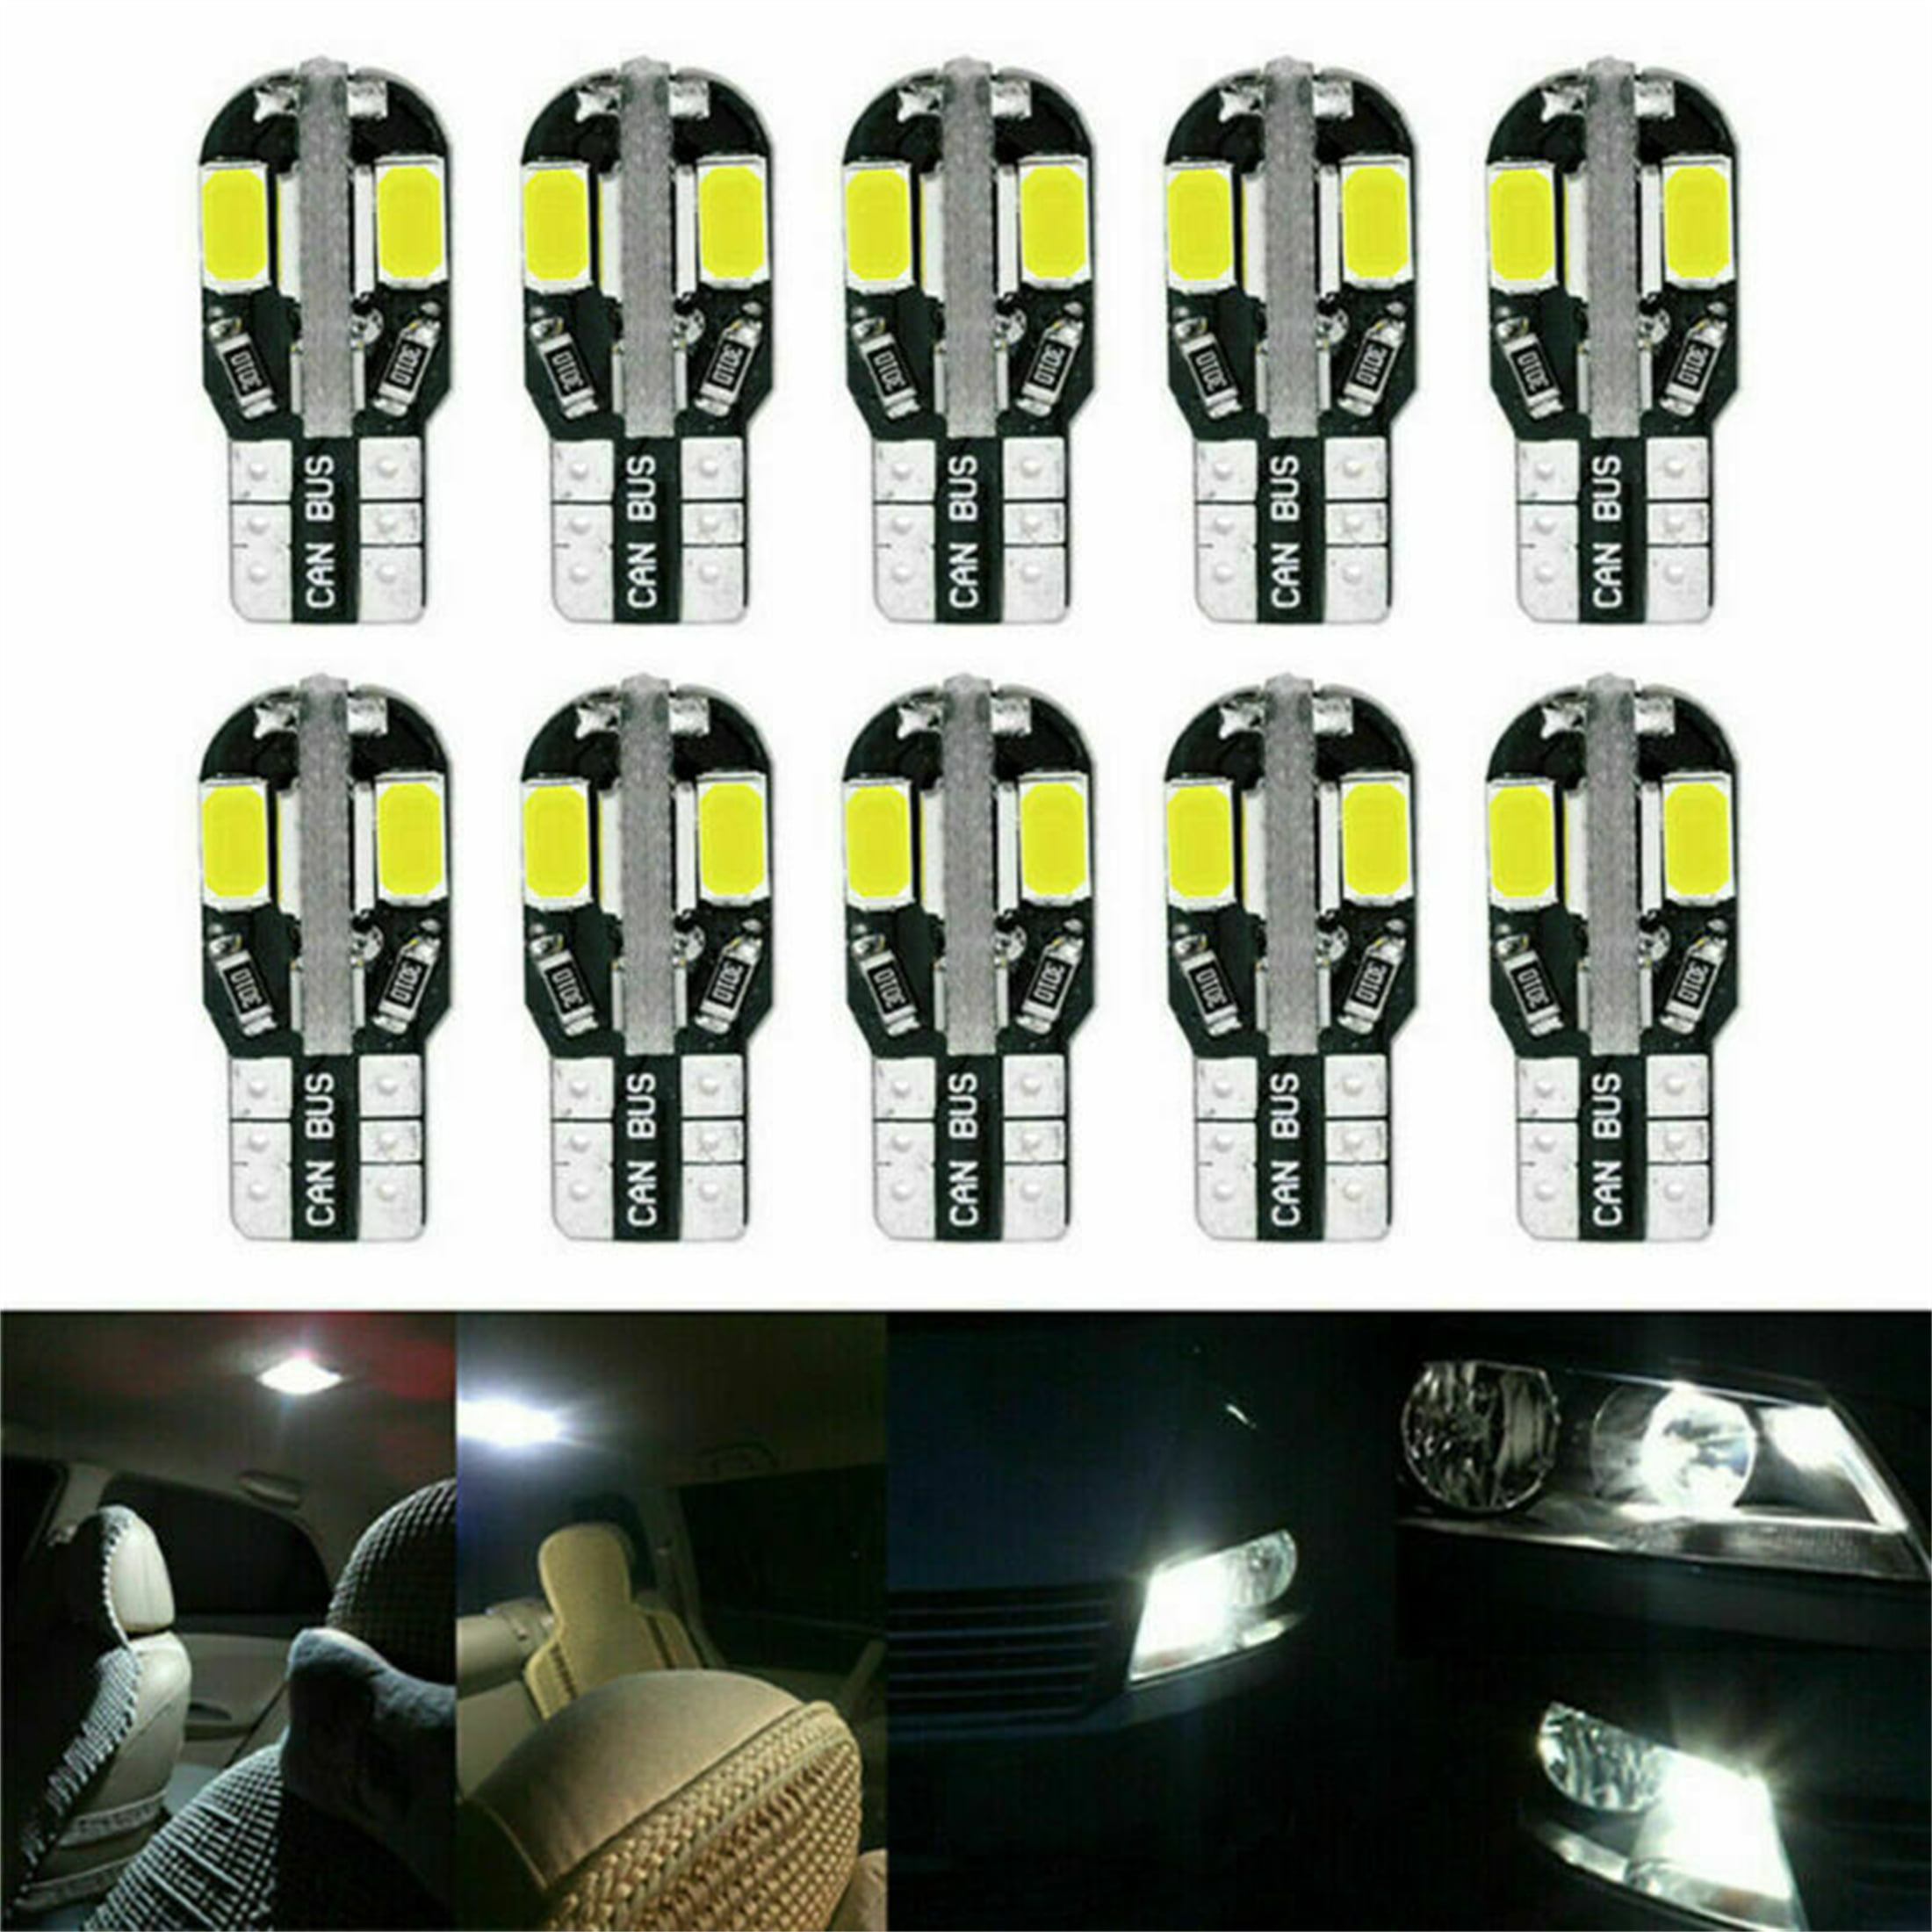 4 Pack T10 501 W5W Car LED Bulbs,3030 SMD 8 LED With Canbus Universal Car LED Interior Lights Parking Light Reserve Light Side Light License Plate Light 12-24V-Amber